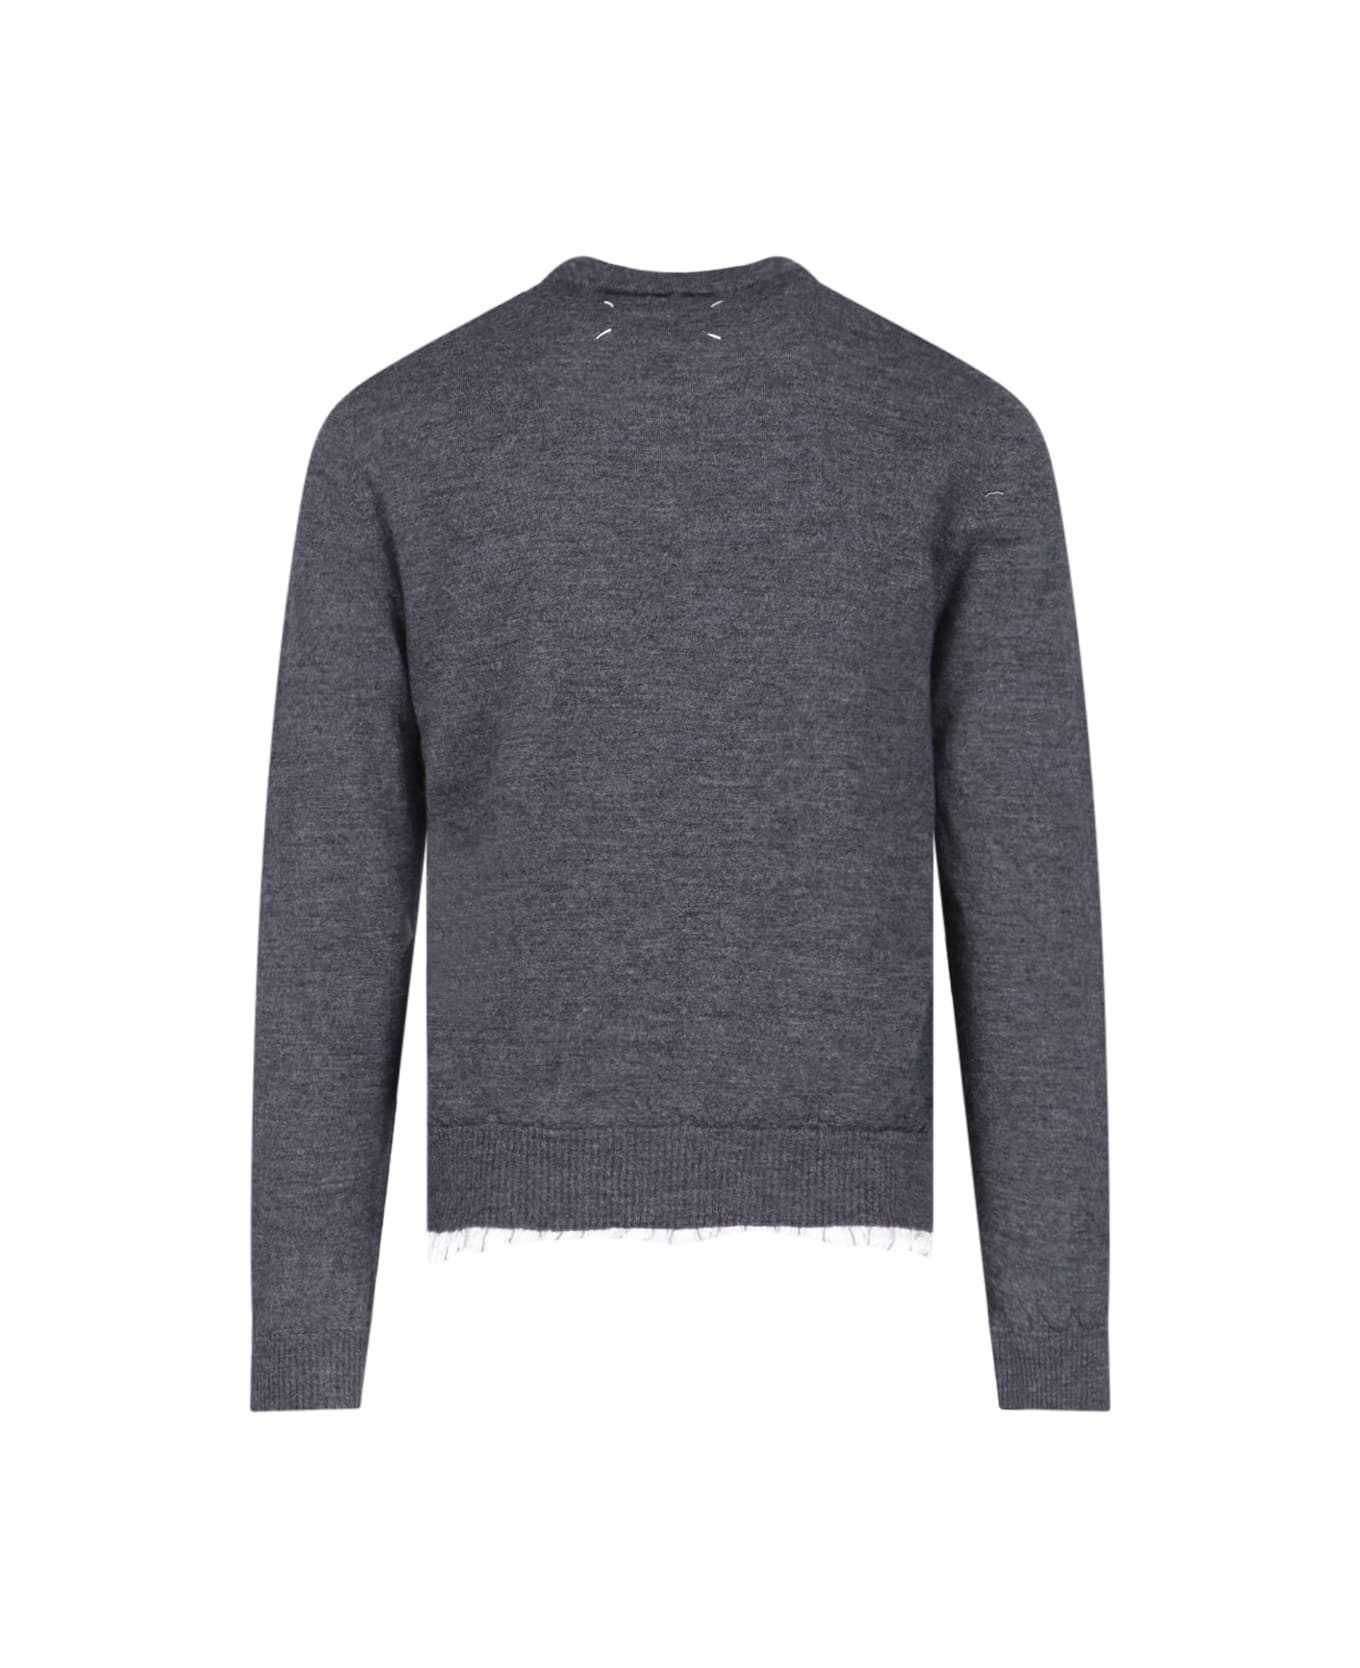 Maison Margiela Distressed Rib Sweatshirt - Grey ニットウェア